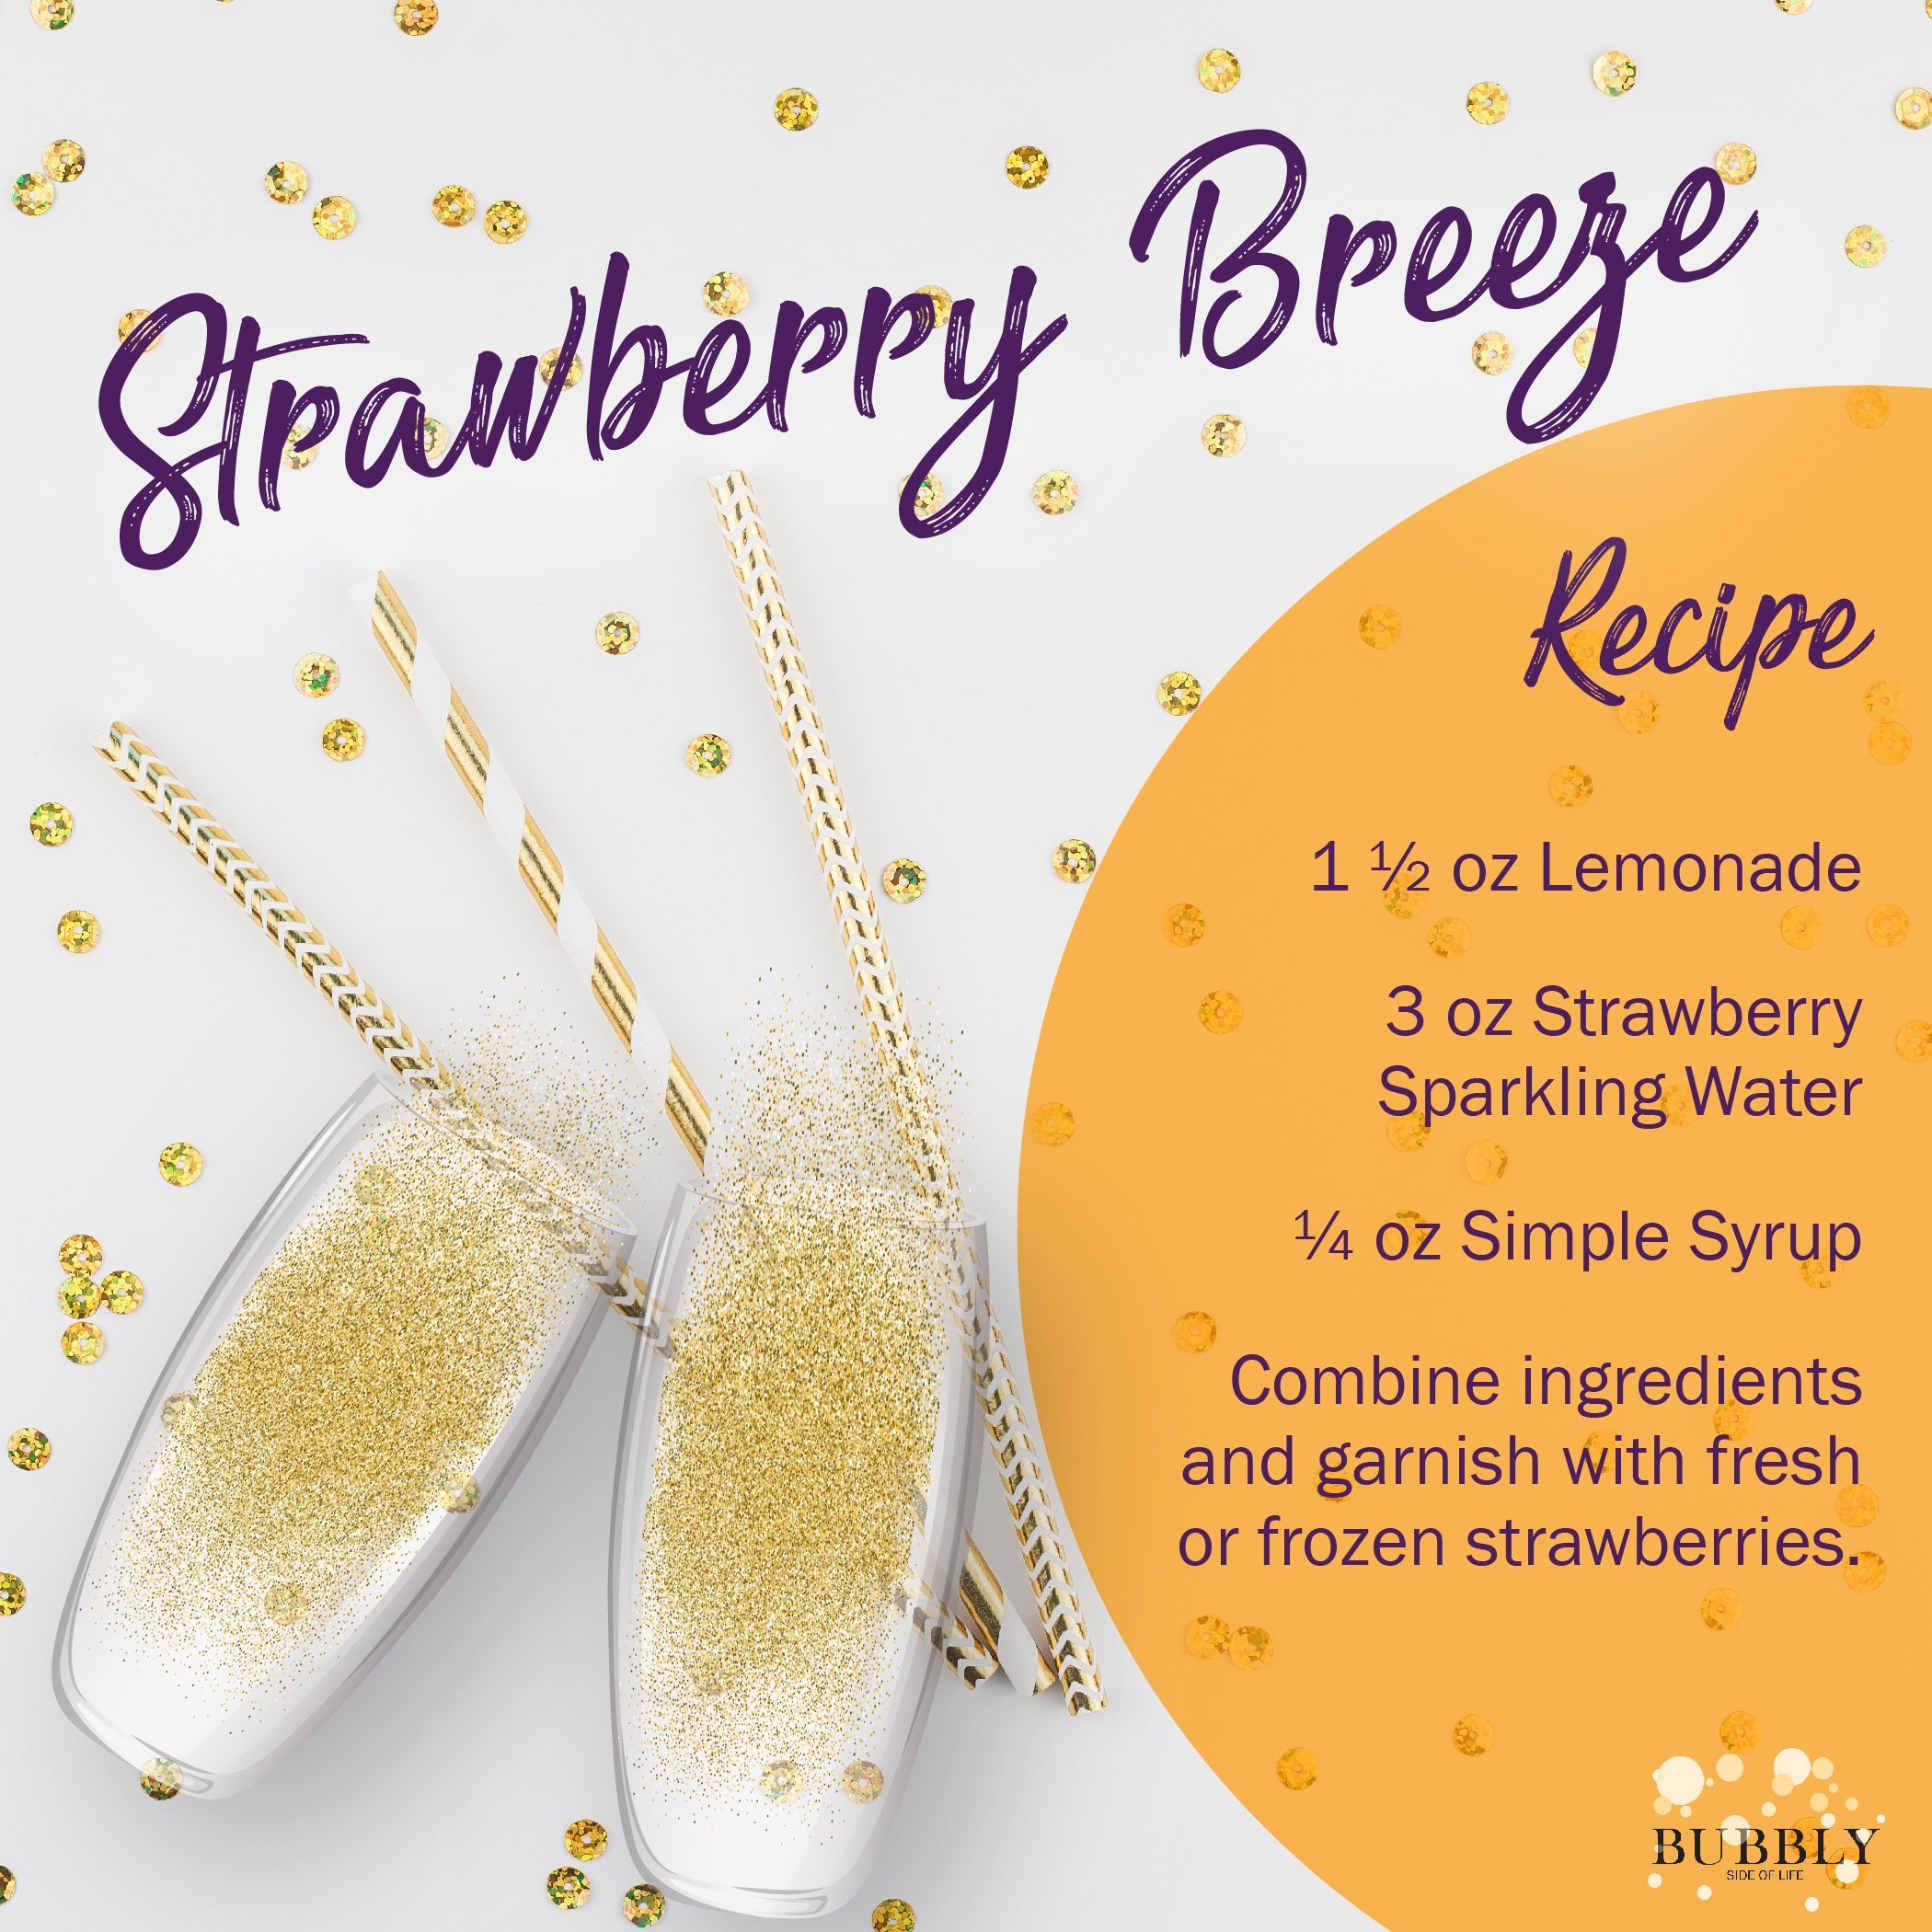 Strawberry Breeze recipe card